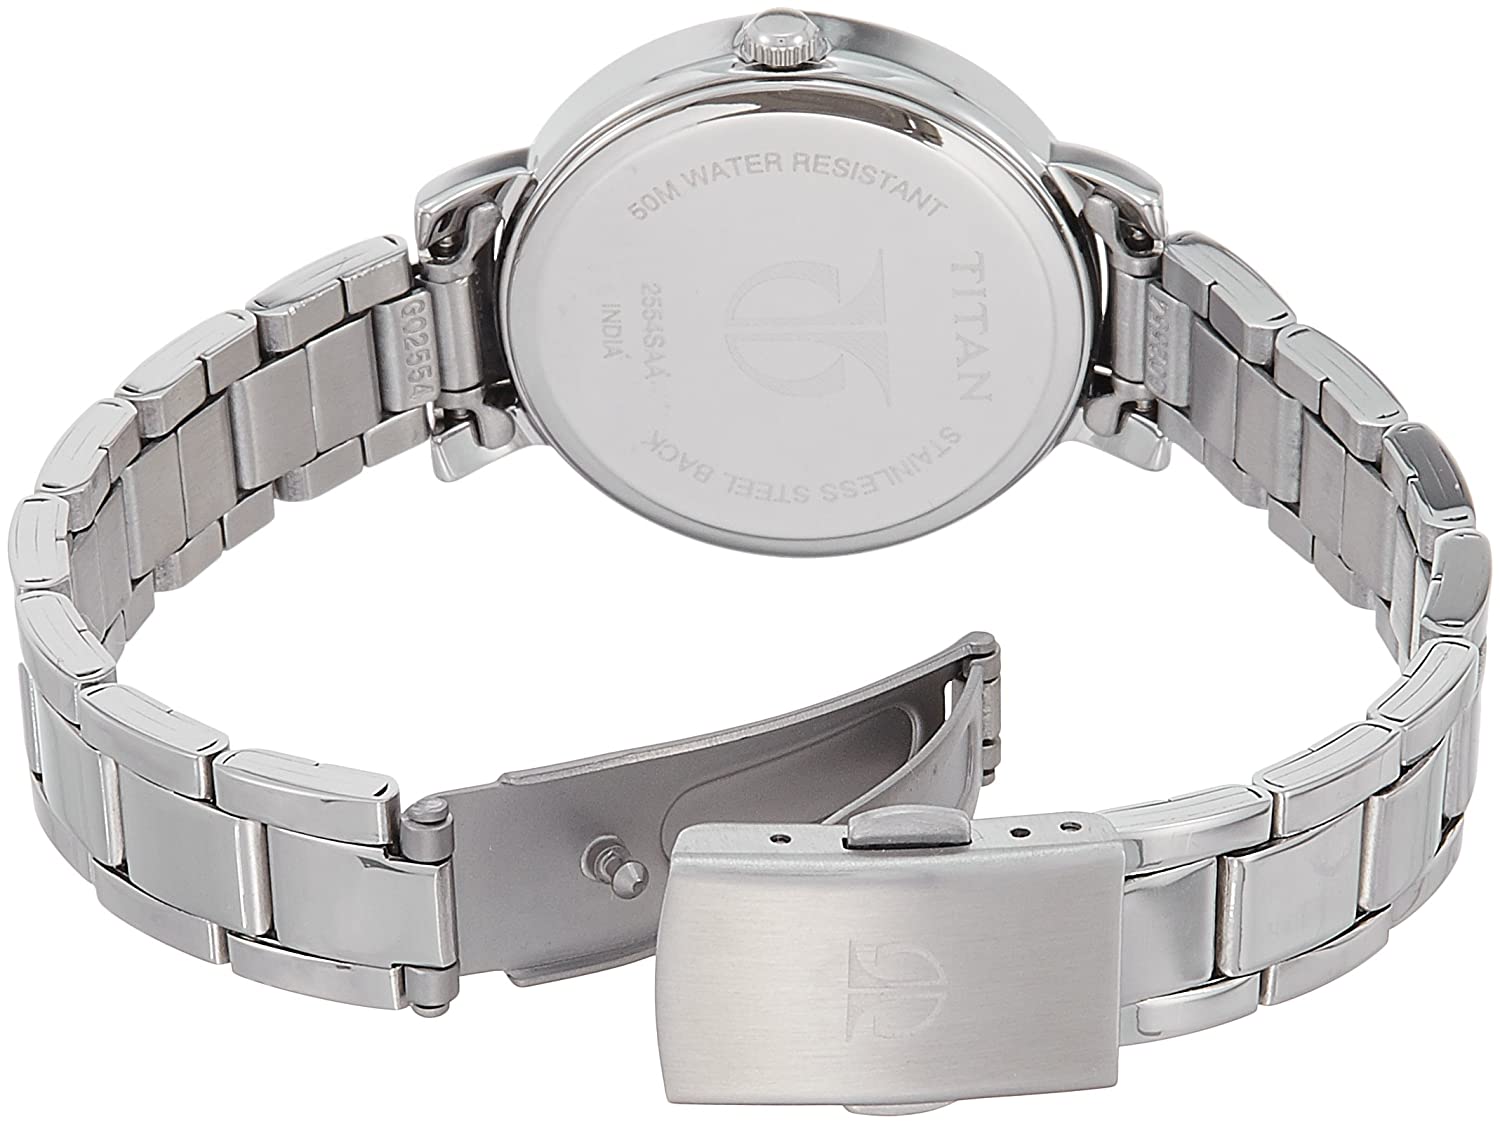 Titan Women's Watch, Analog, Stainless Steel Strap, Silver, NK2554SM02